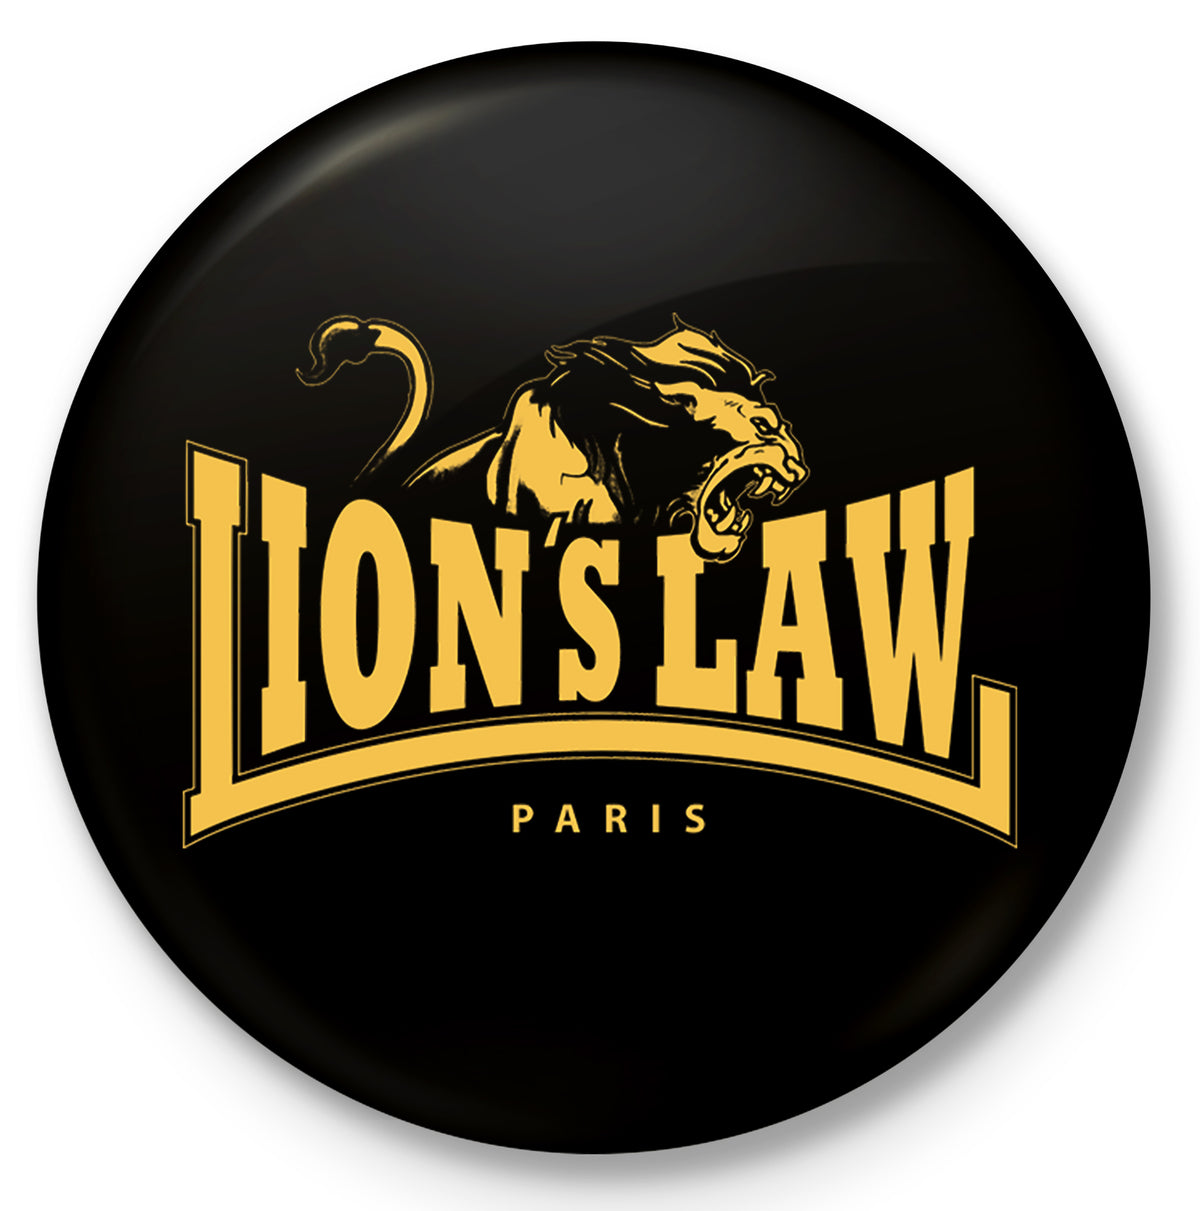 Lion's Law - Open Your Eyes LP Smoke Marble Vinyl LP - Pirates Press Records